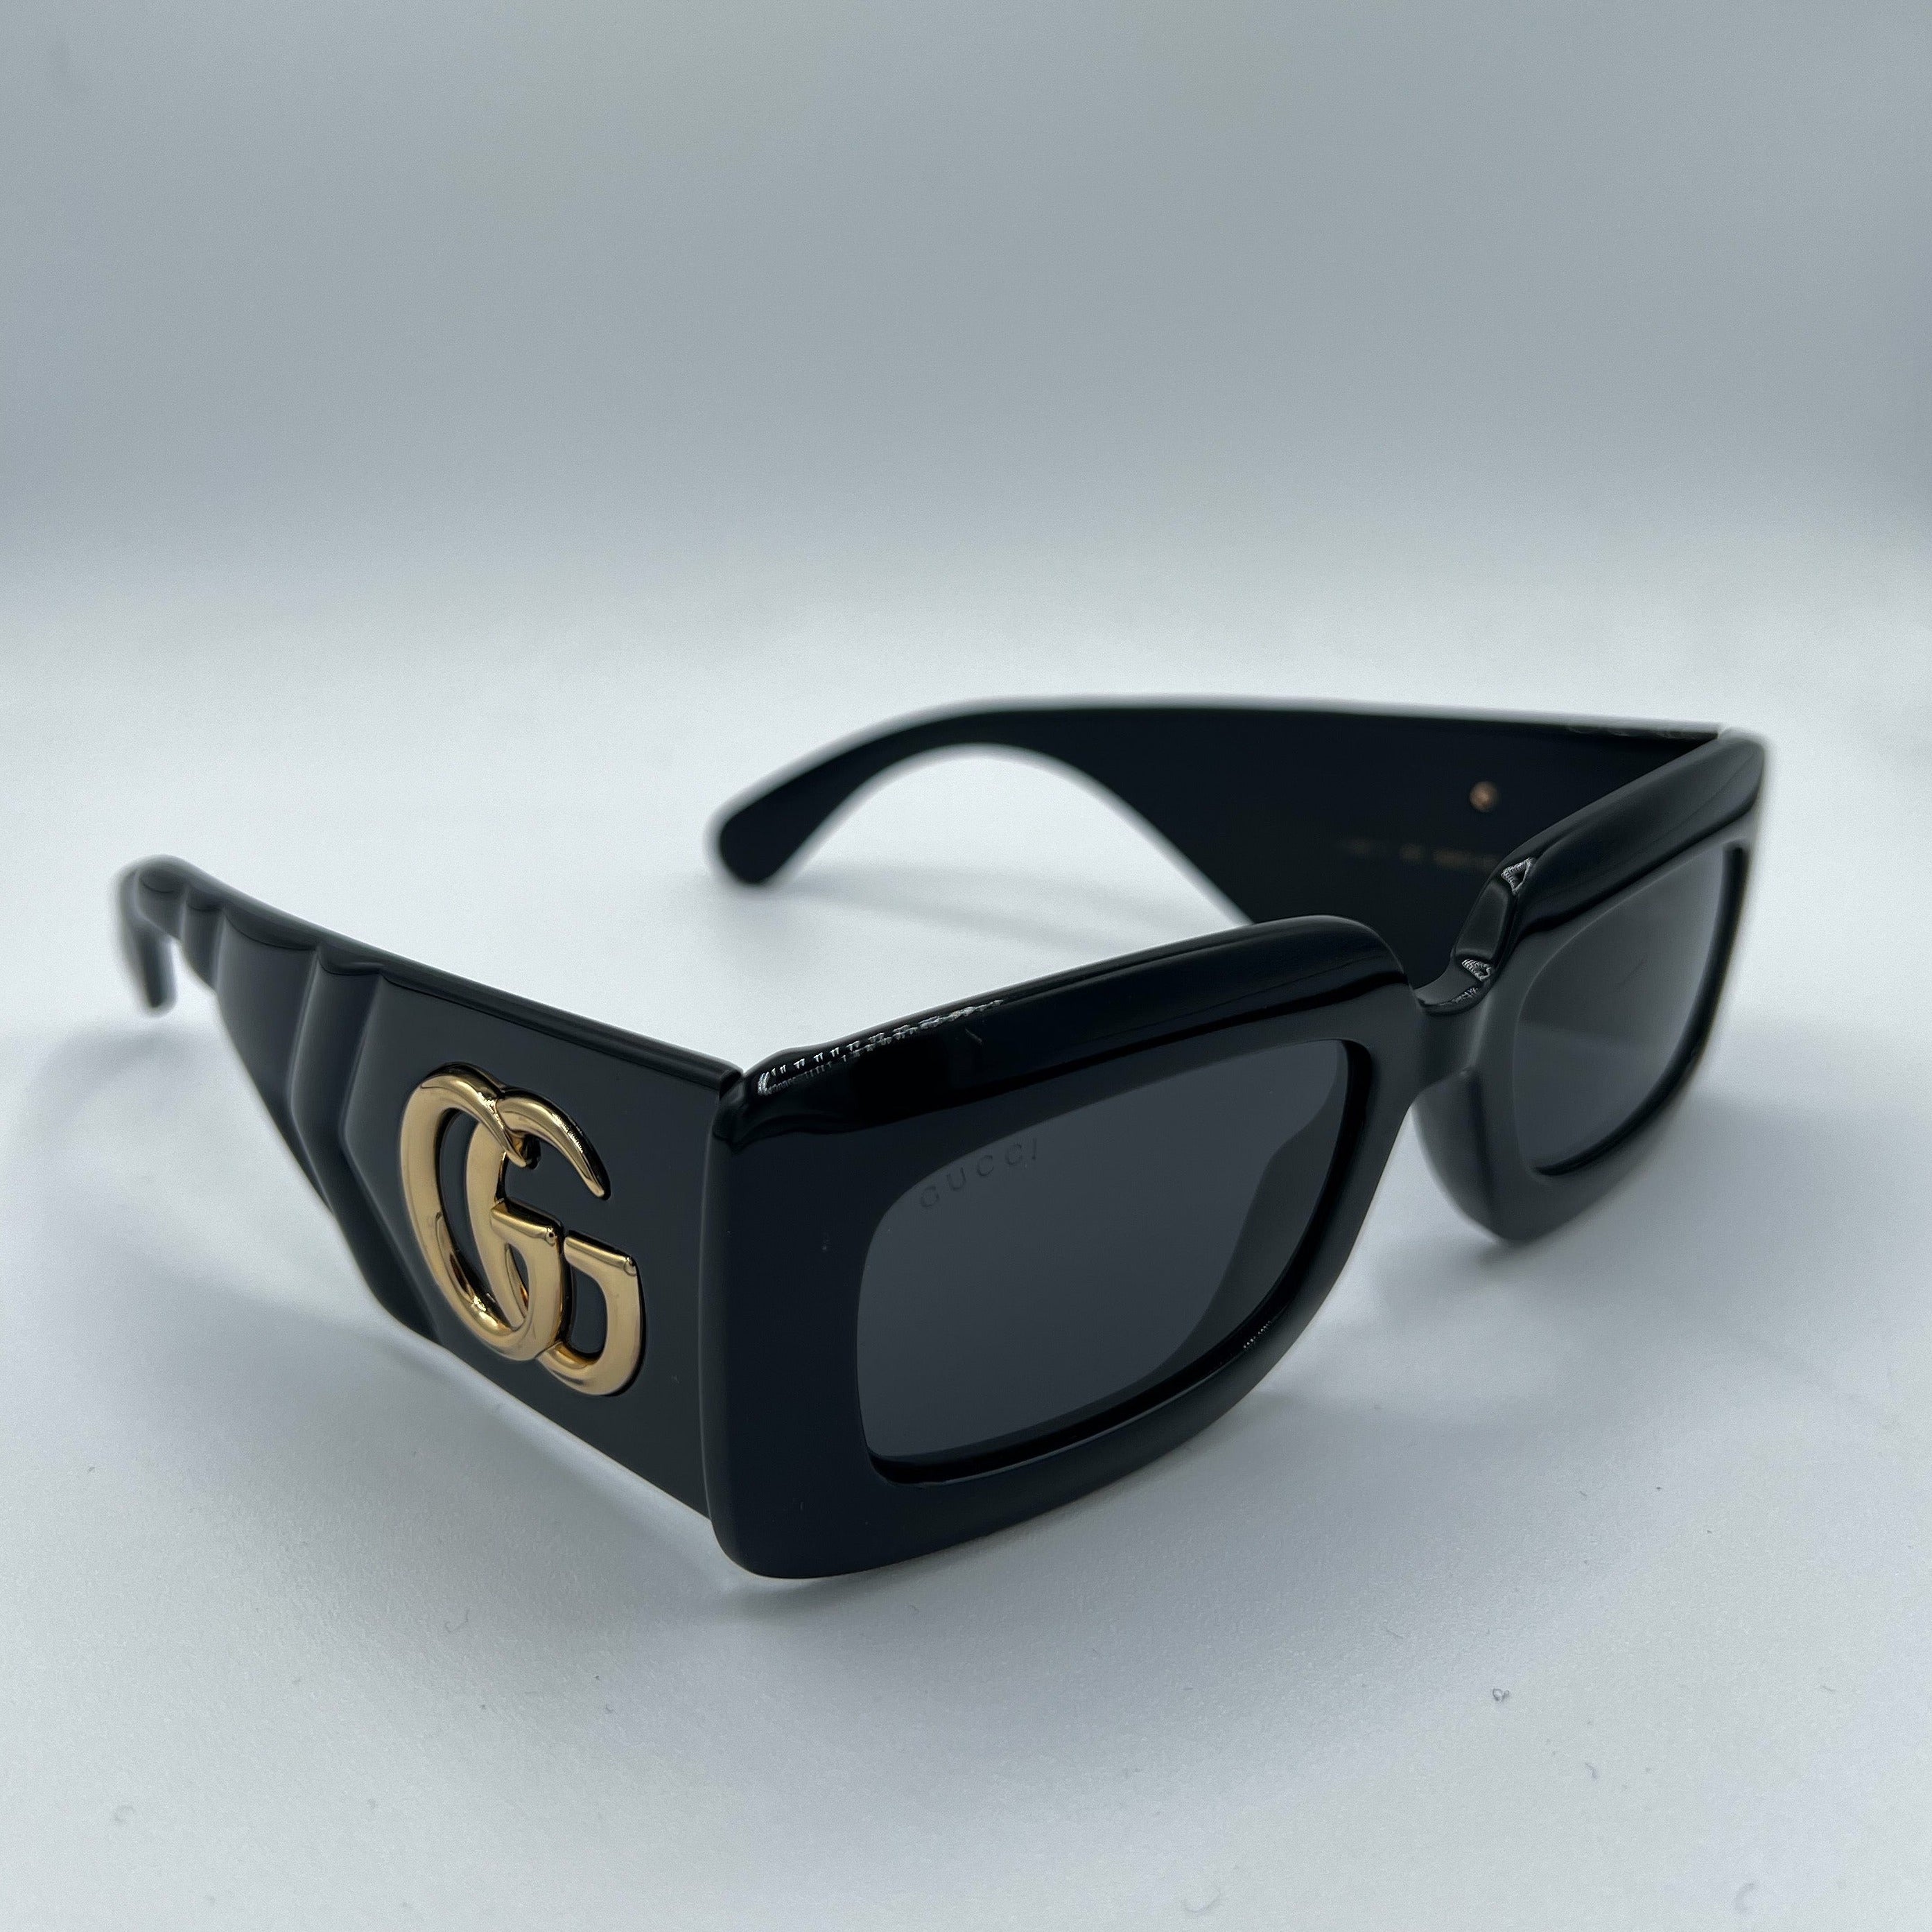 Rectangular-frame sunglasses in black injection